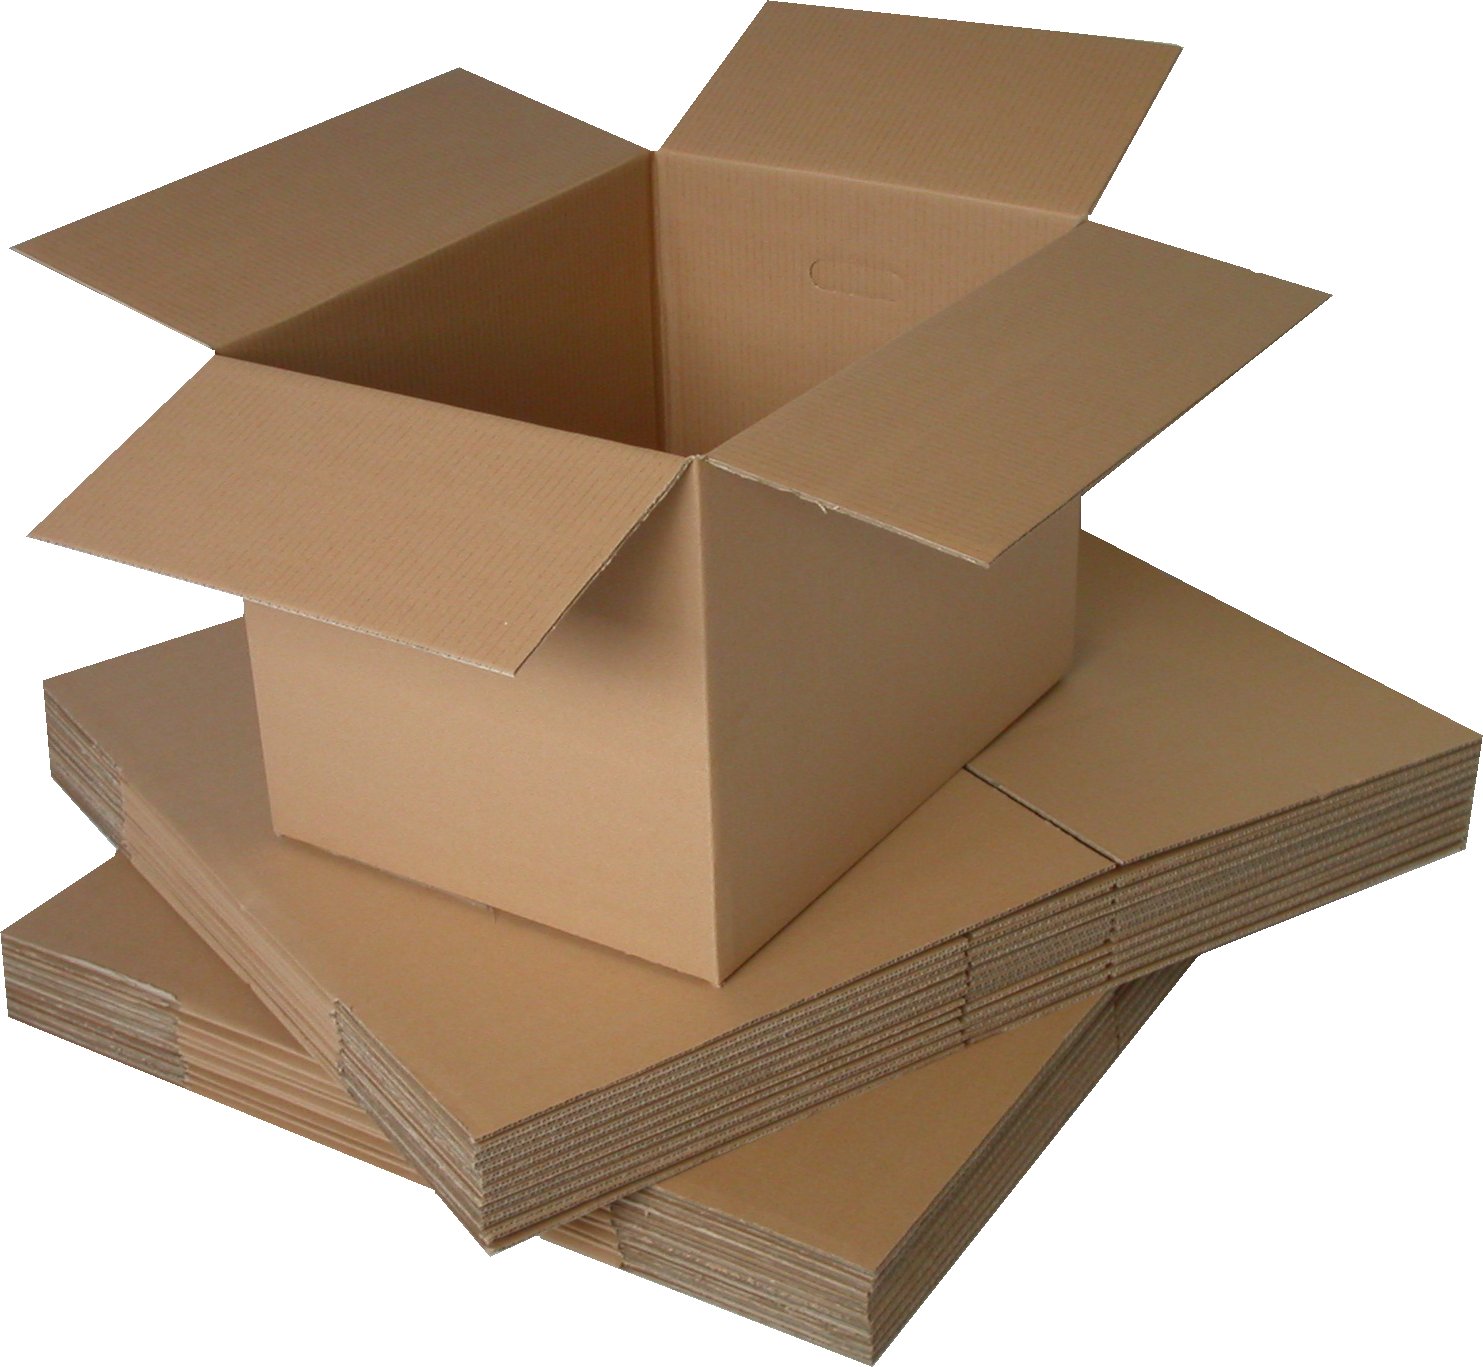 Cardboard Boxes Samples | Discount Box Printing